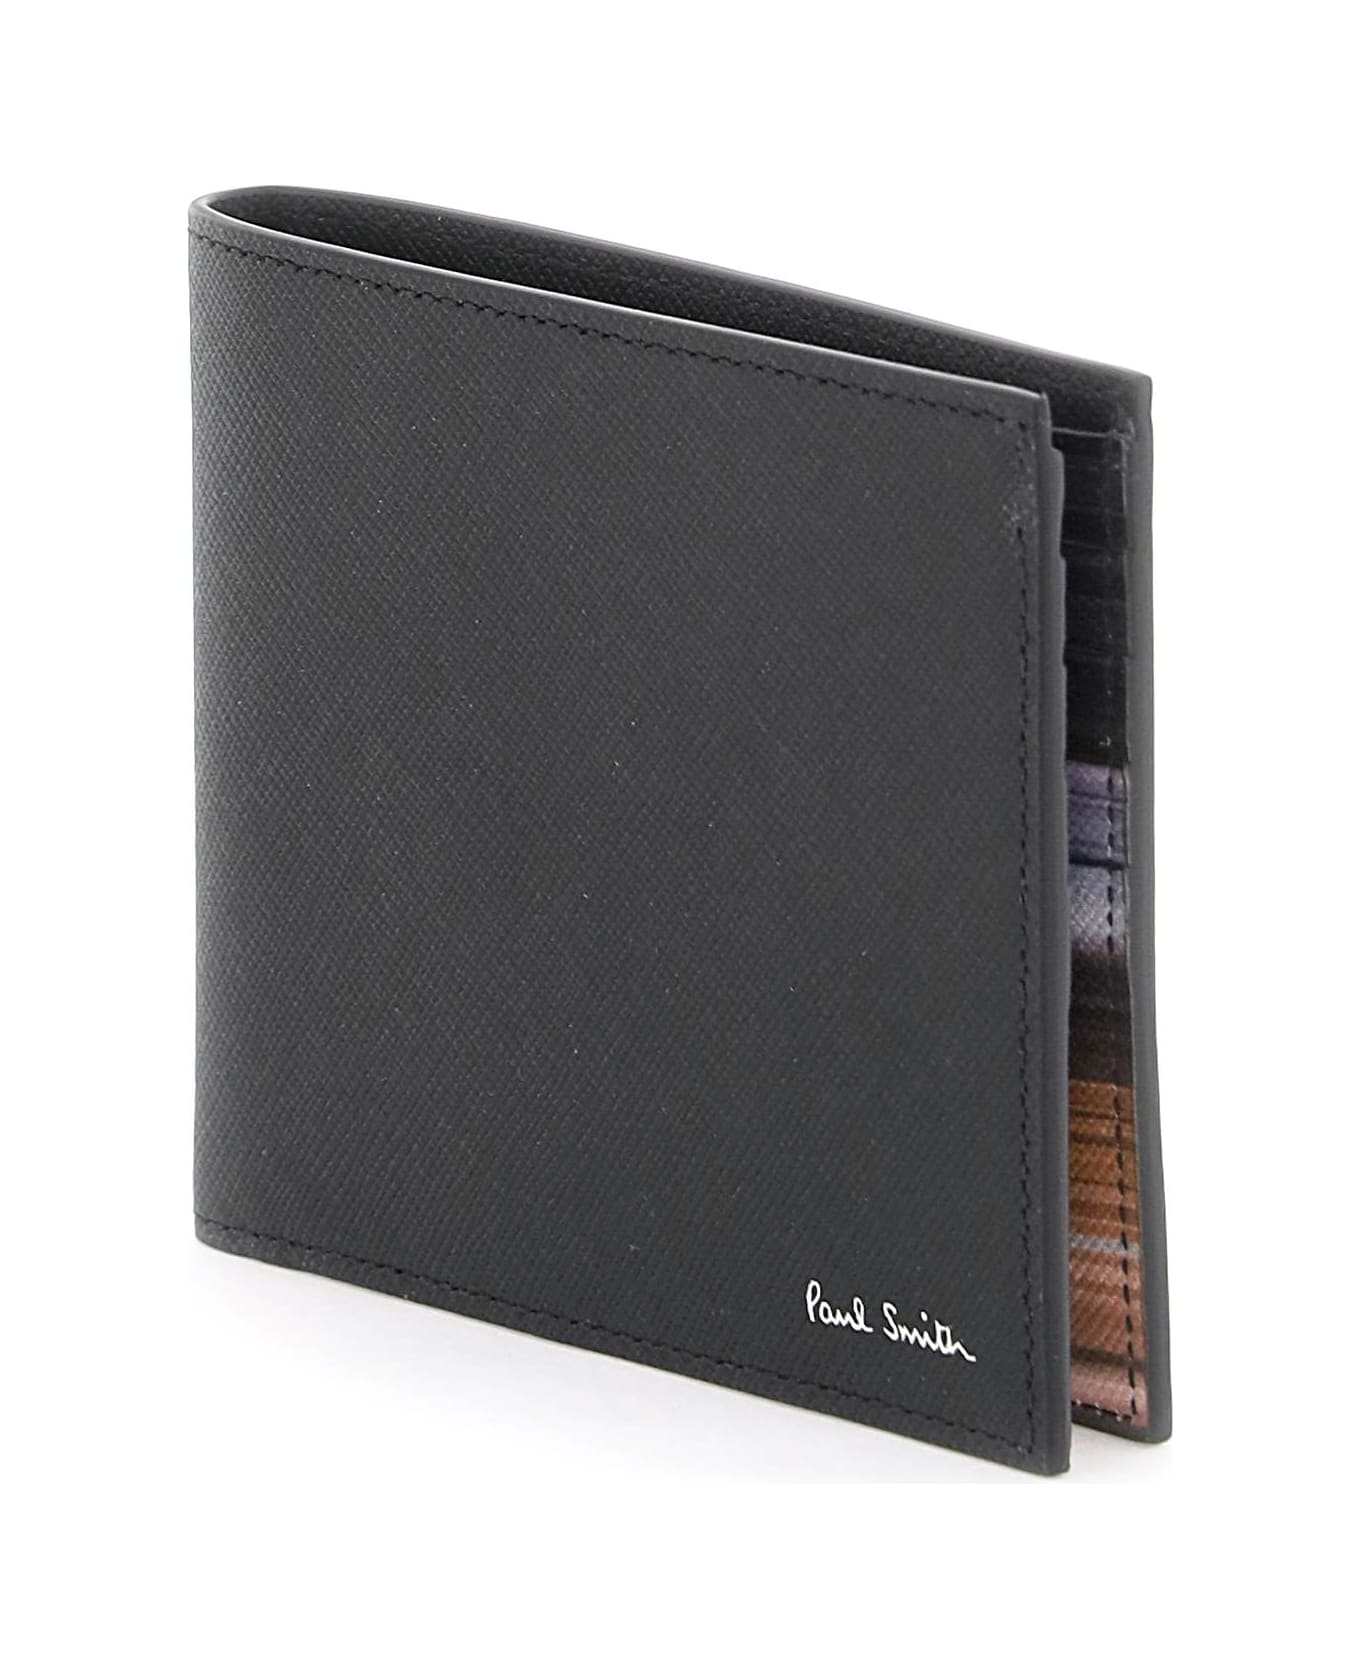 Paul Smith Leather Wallet - BLACK (Black)